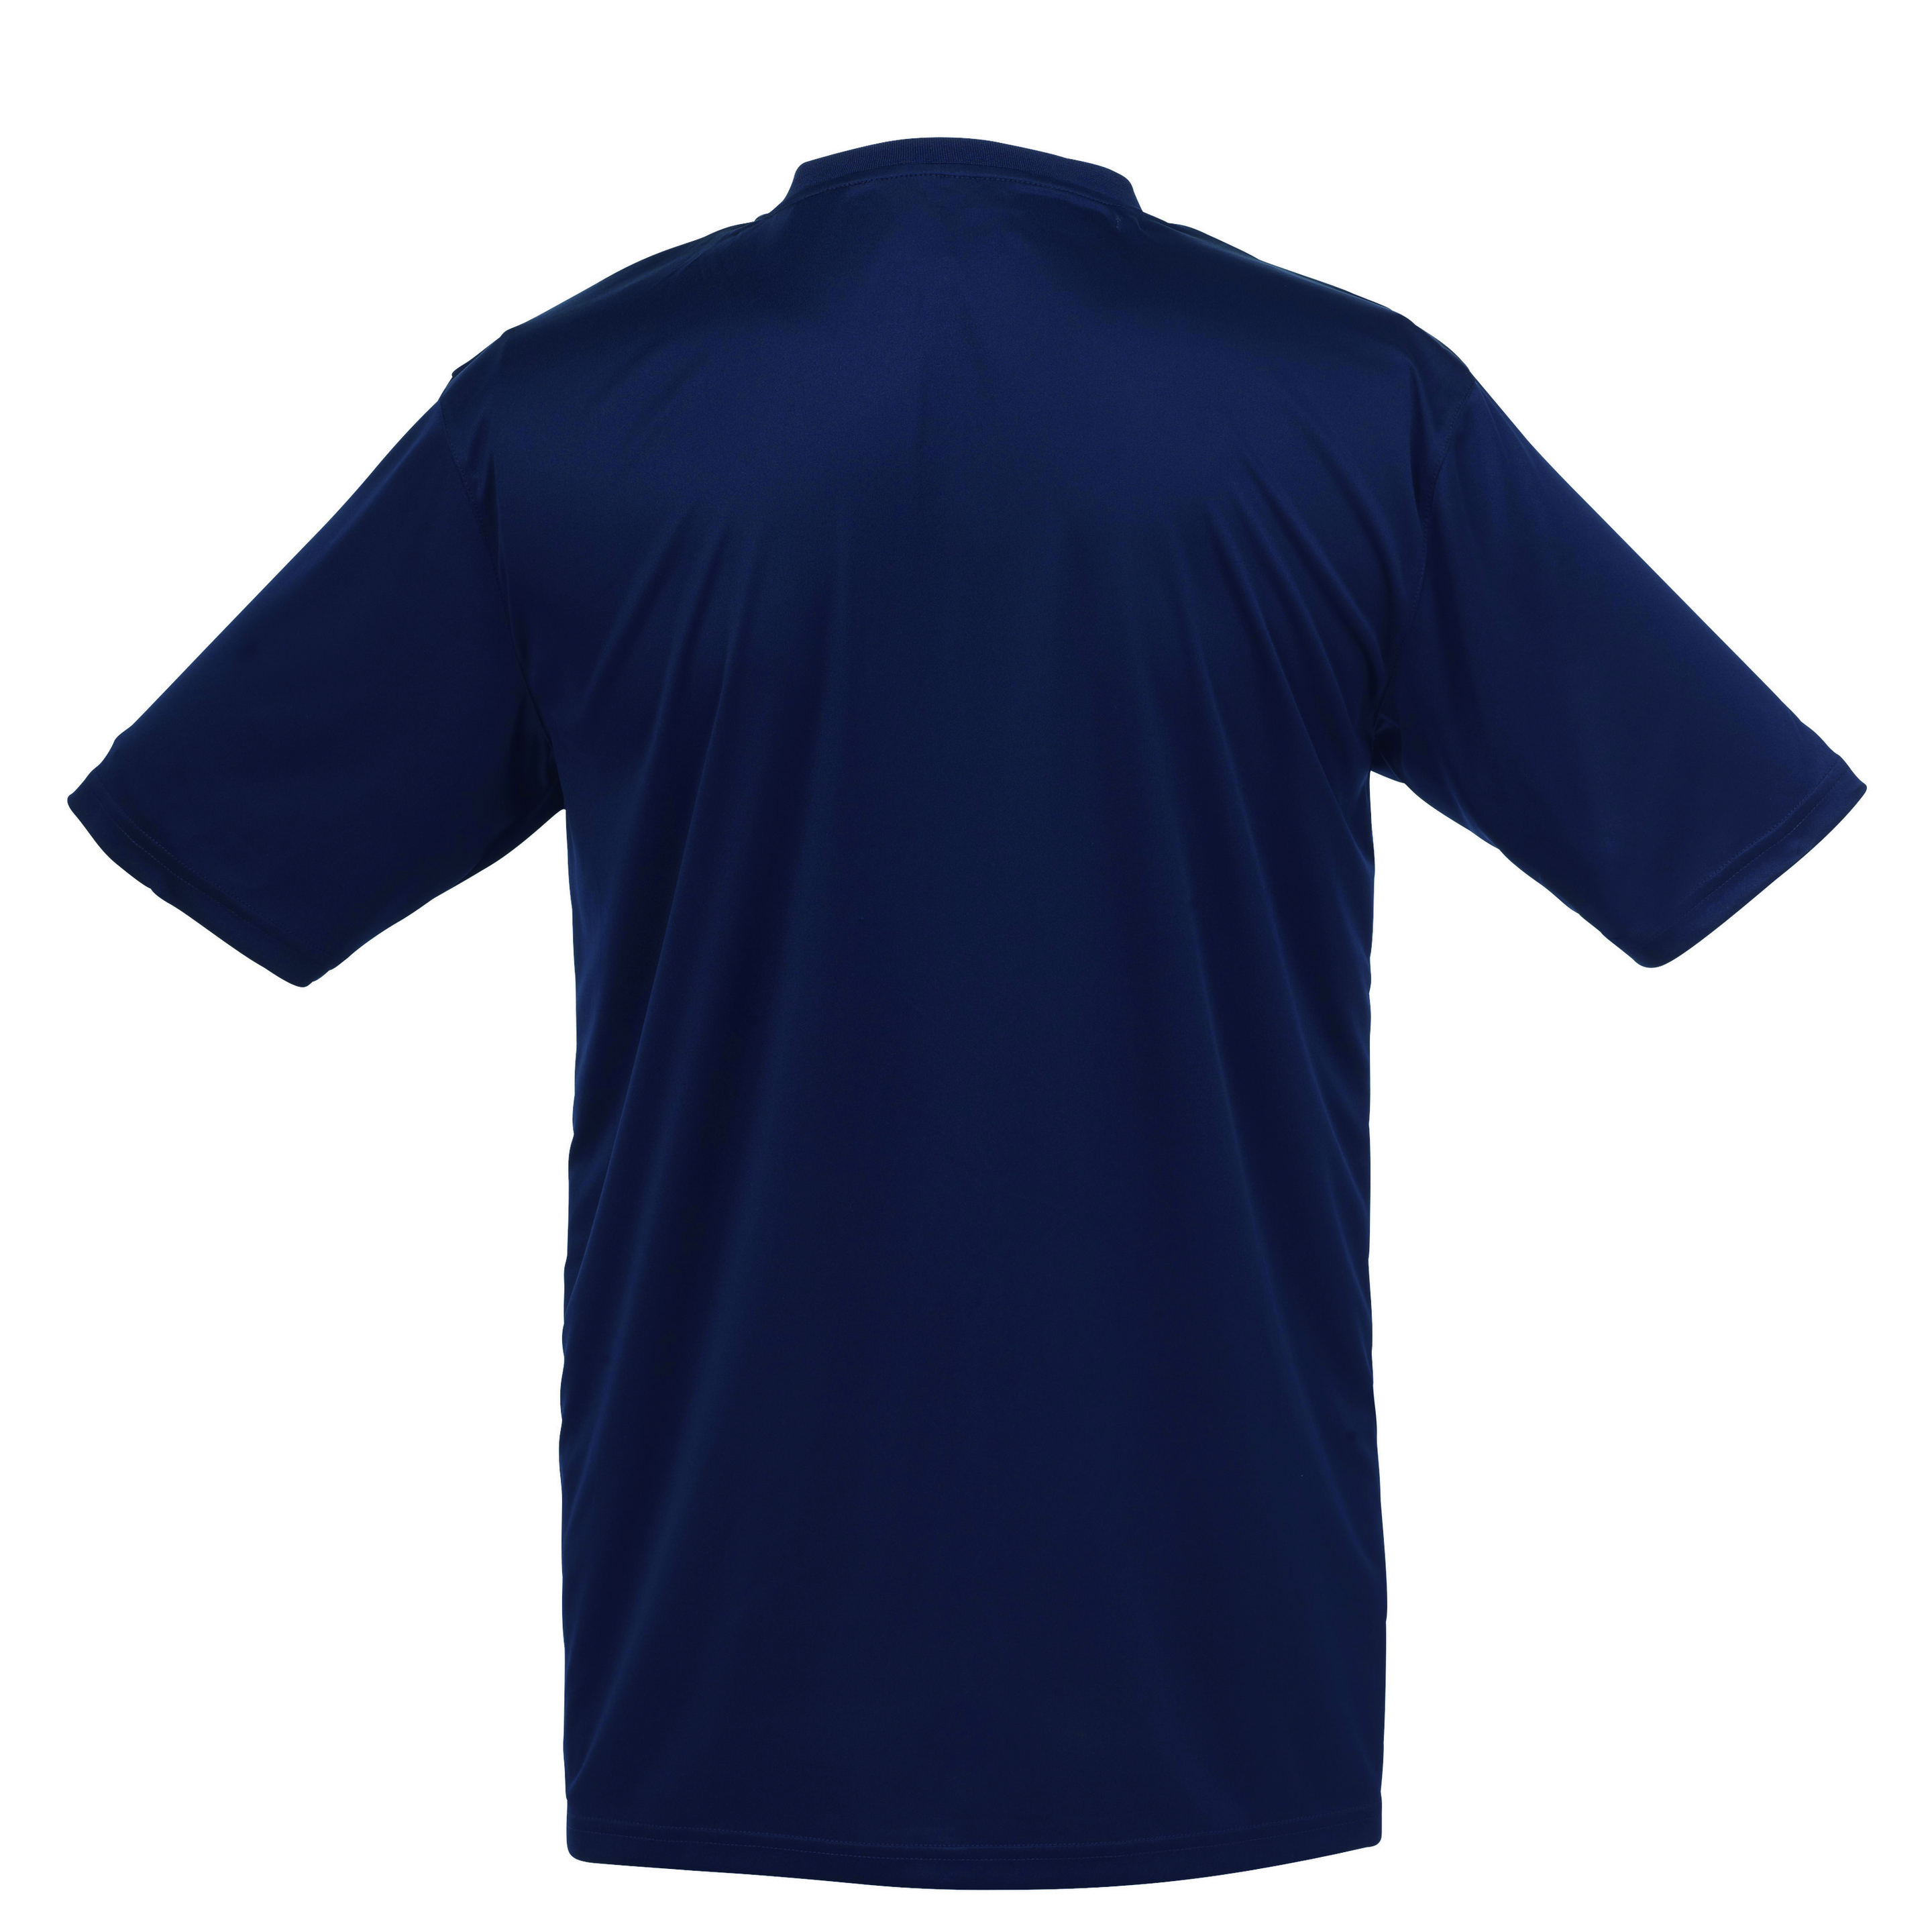 Essential Pes Camiseta De Entrenamiento Azul Marino Uhlsport